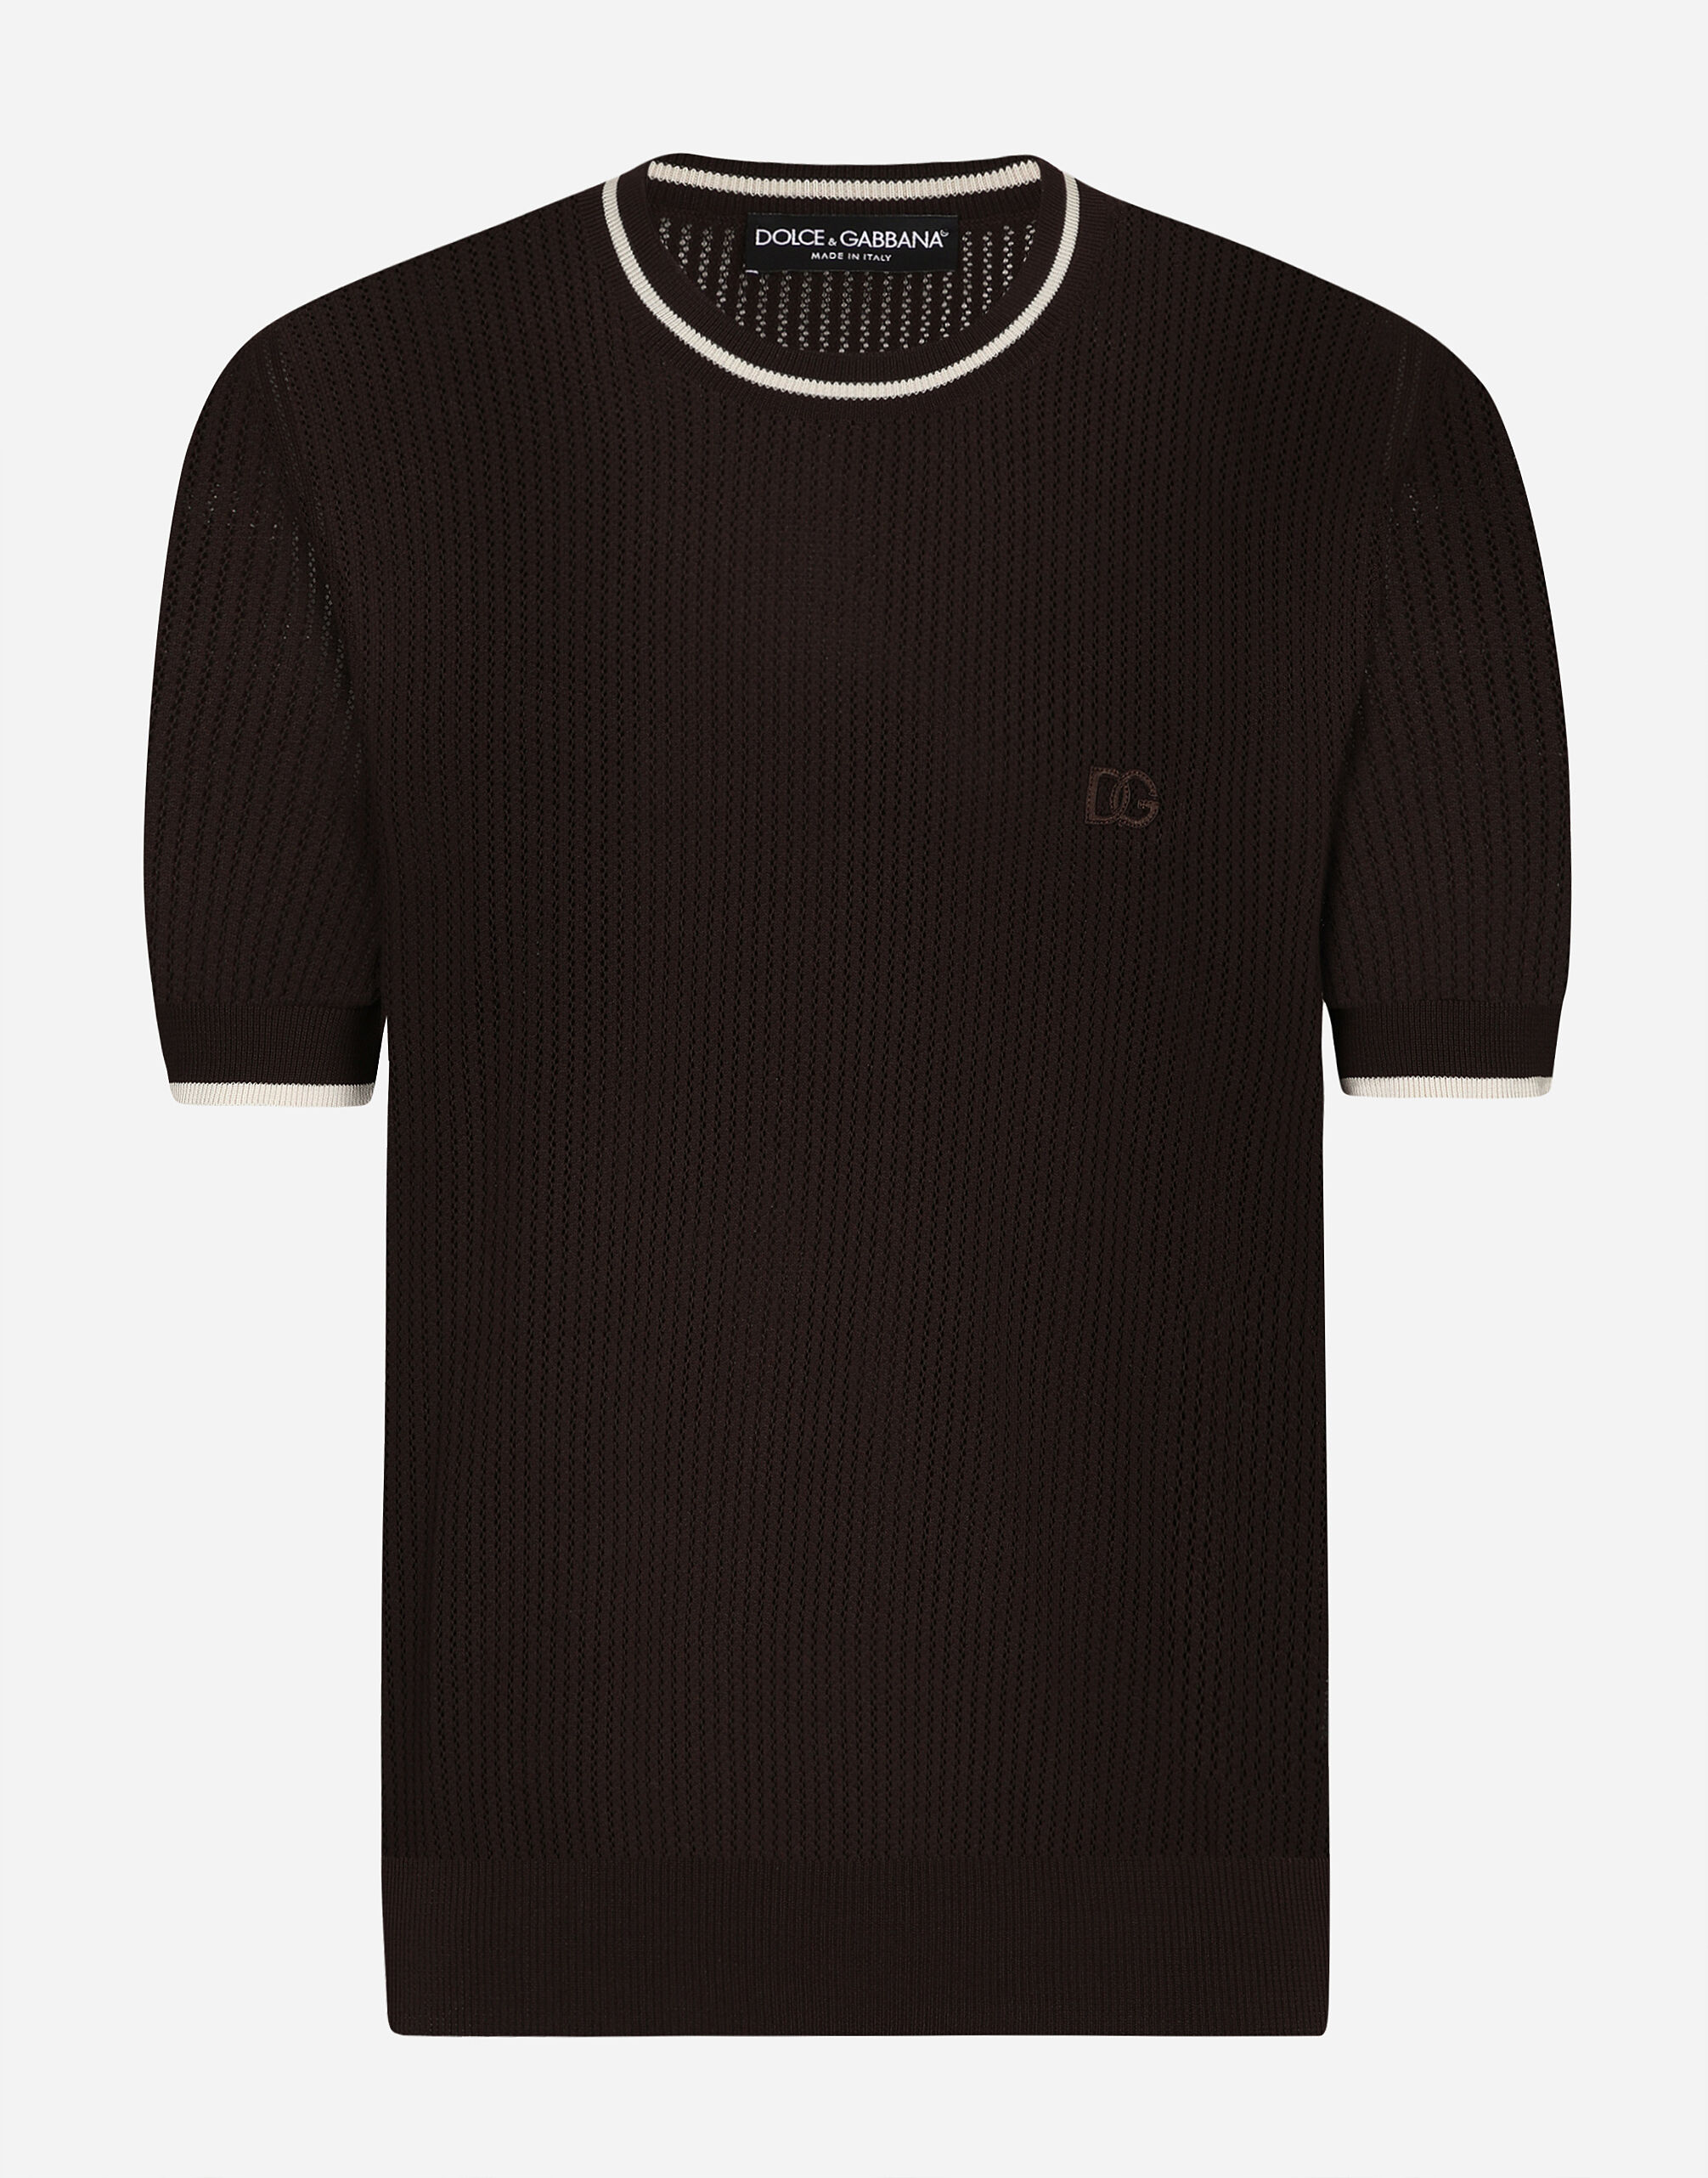 Dolce & Gabbana Round-neck cotton sweater with DG logo Black GXZ38ZJBCDS